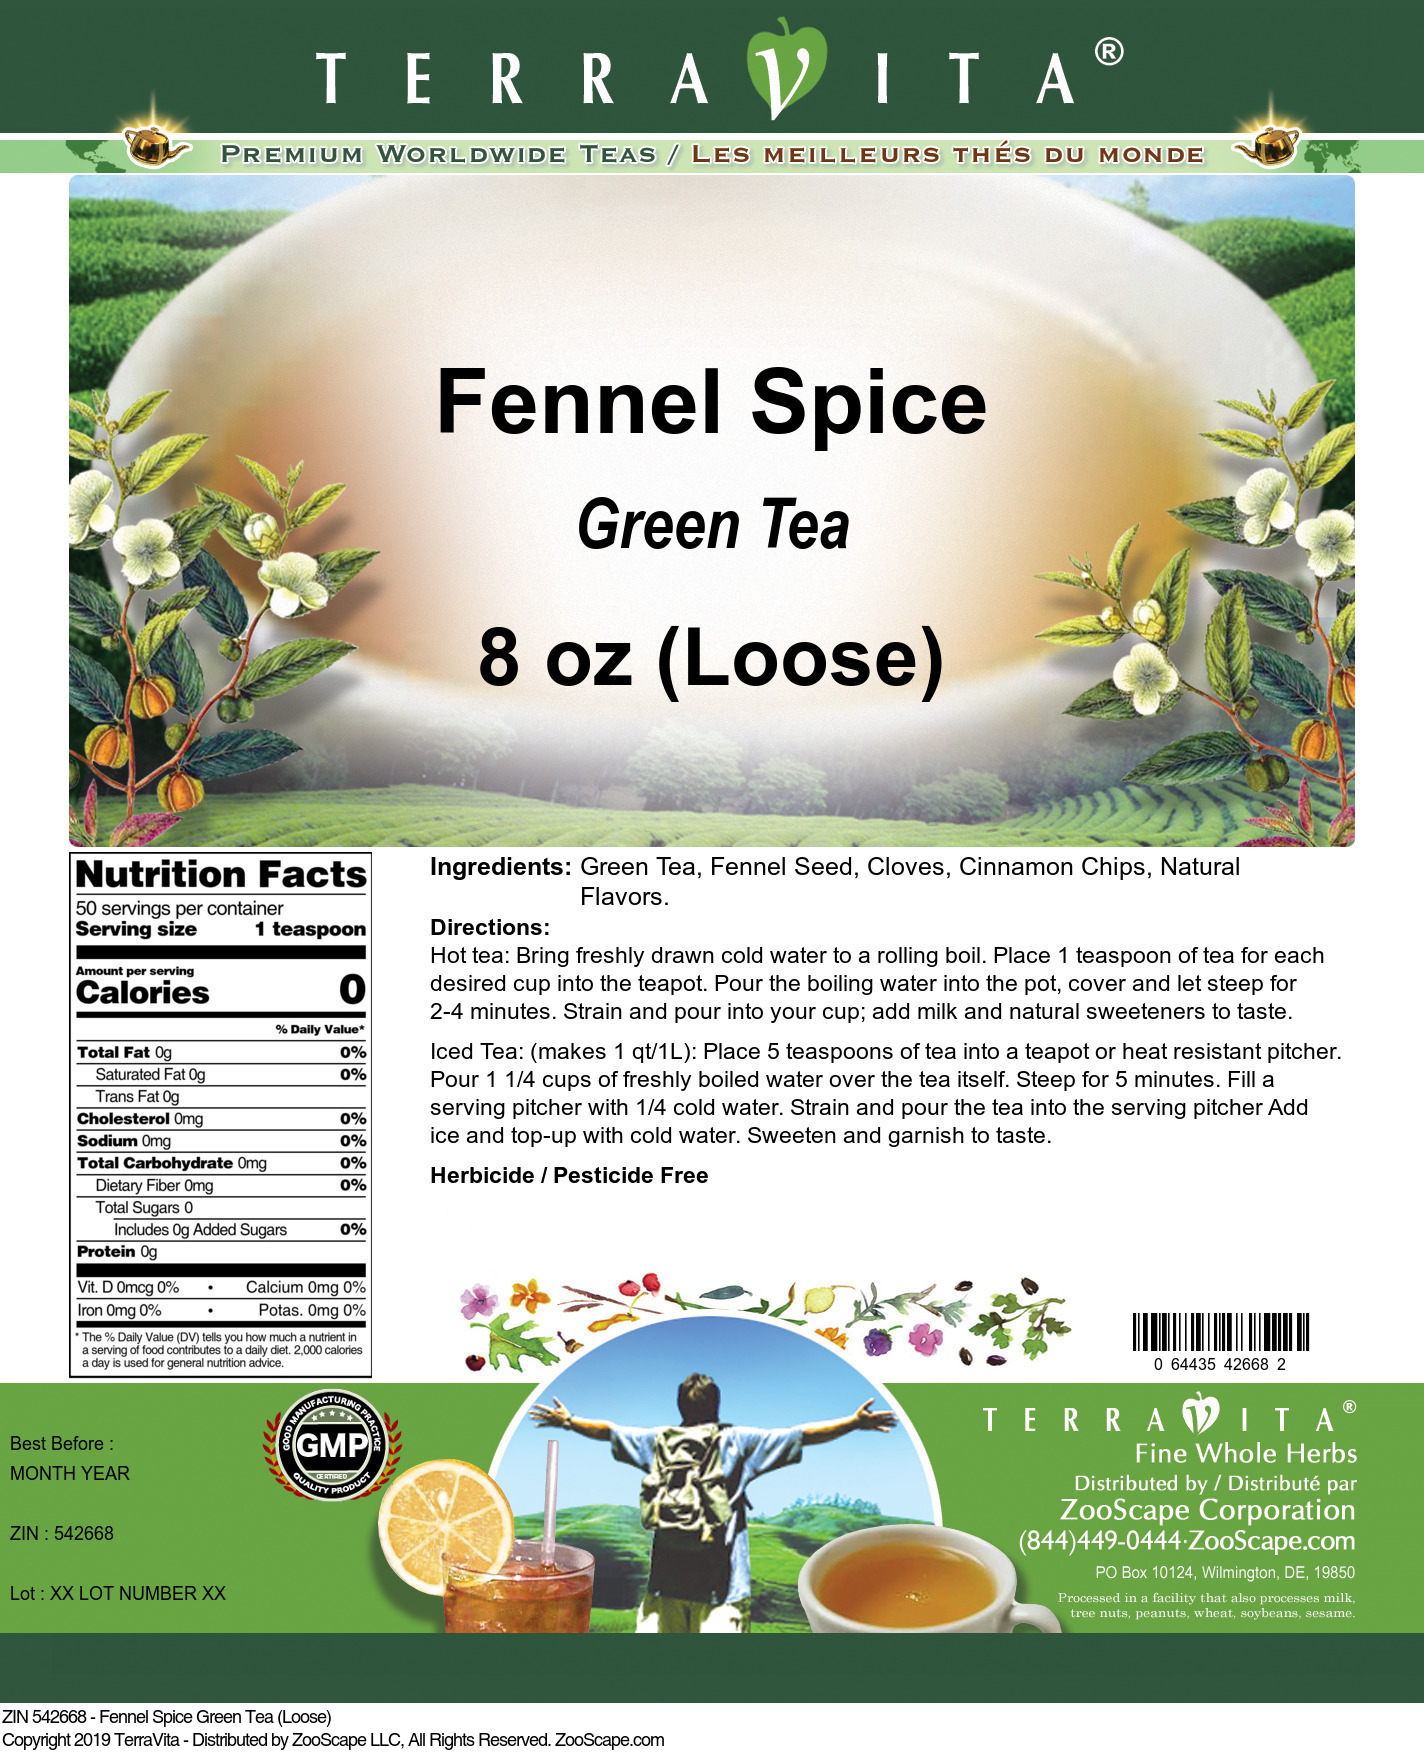 Fennel Spice Green Tea (Loose) - Label